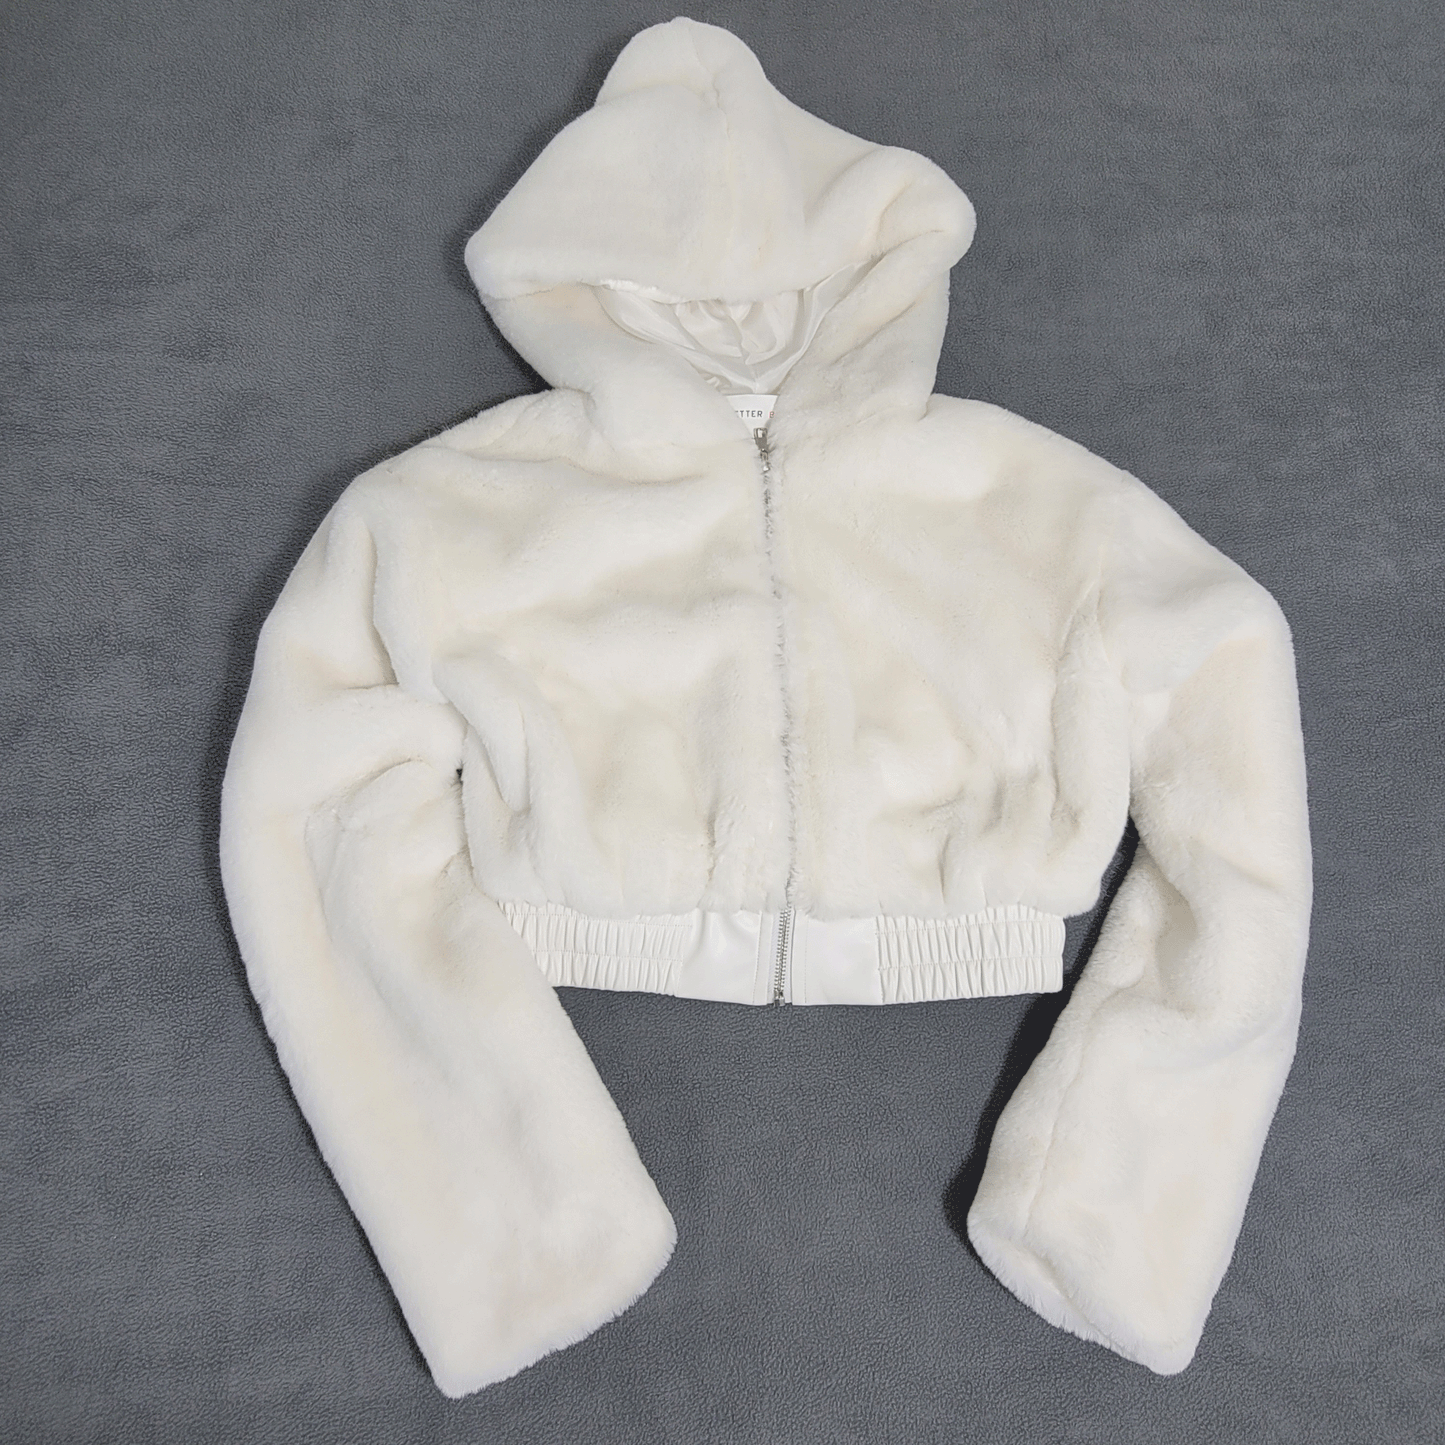 Soft fuzzy fur jacket with hood